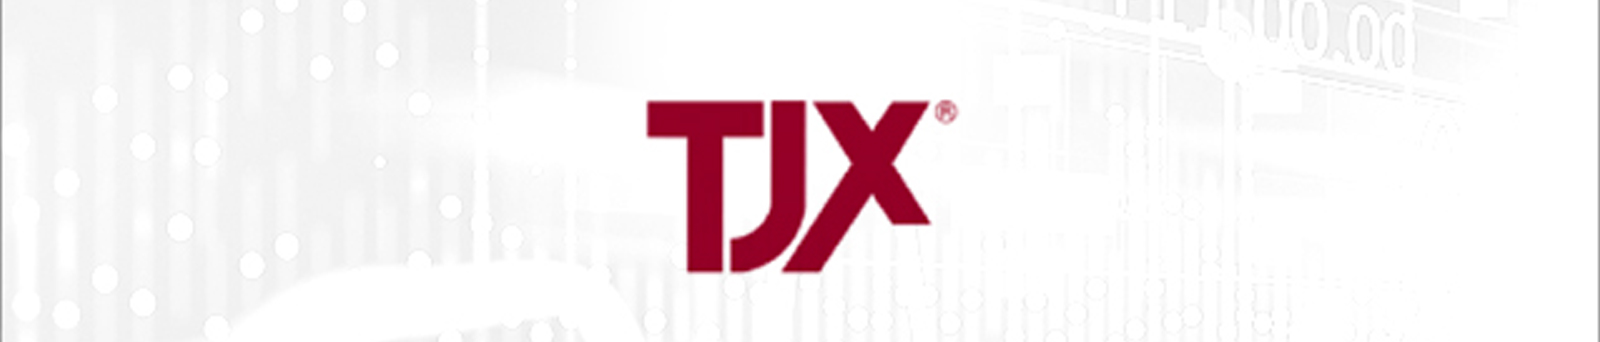 The TJX Companies, Inc. (NYSE: TJX) Company Profile